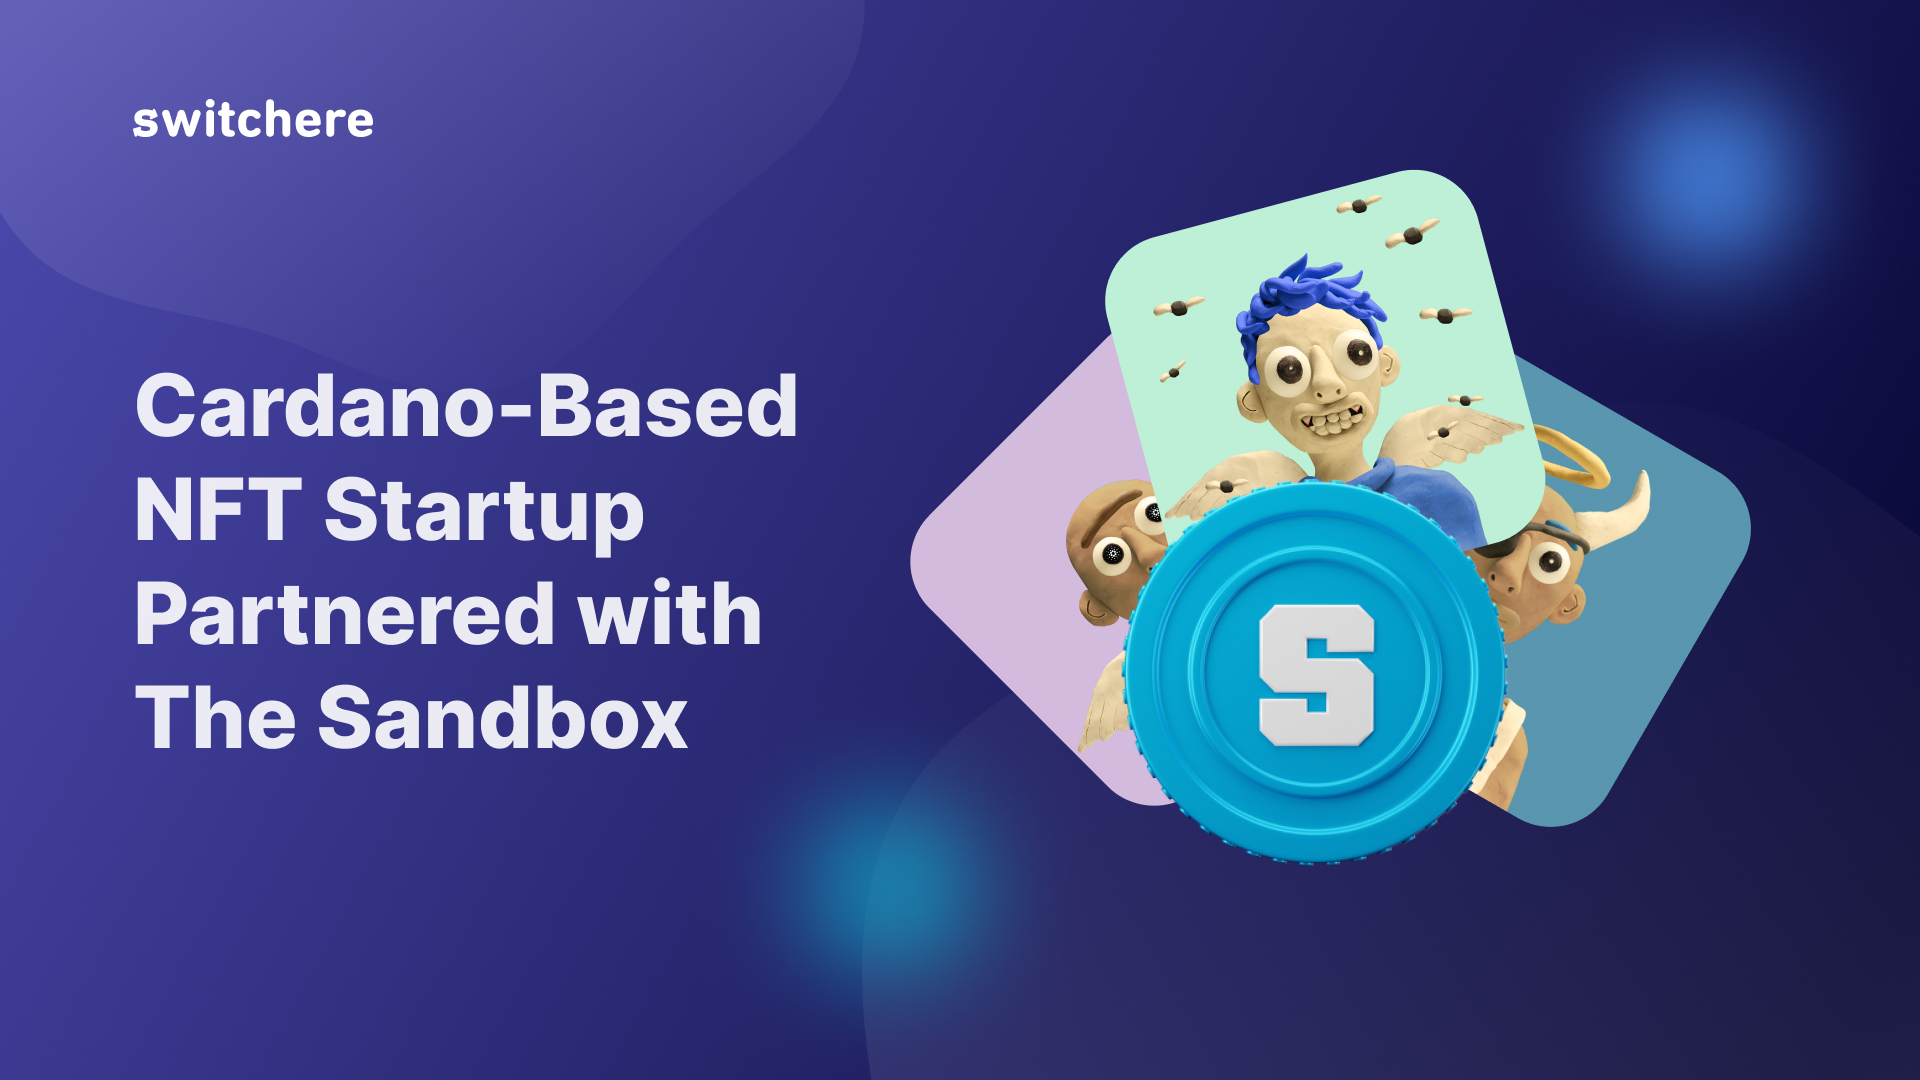 Cardano-Based NFT Startup Partnered with The Sandbox